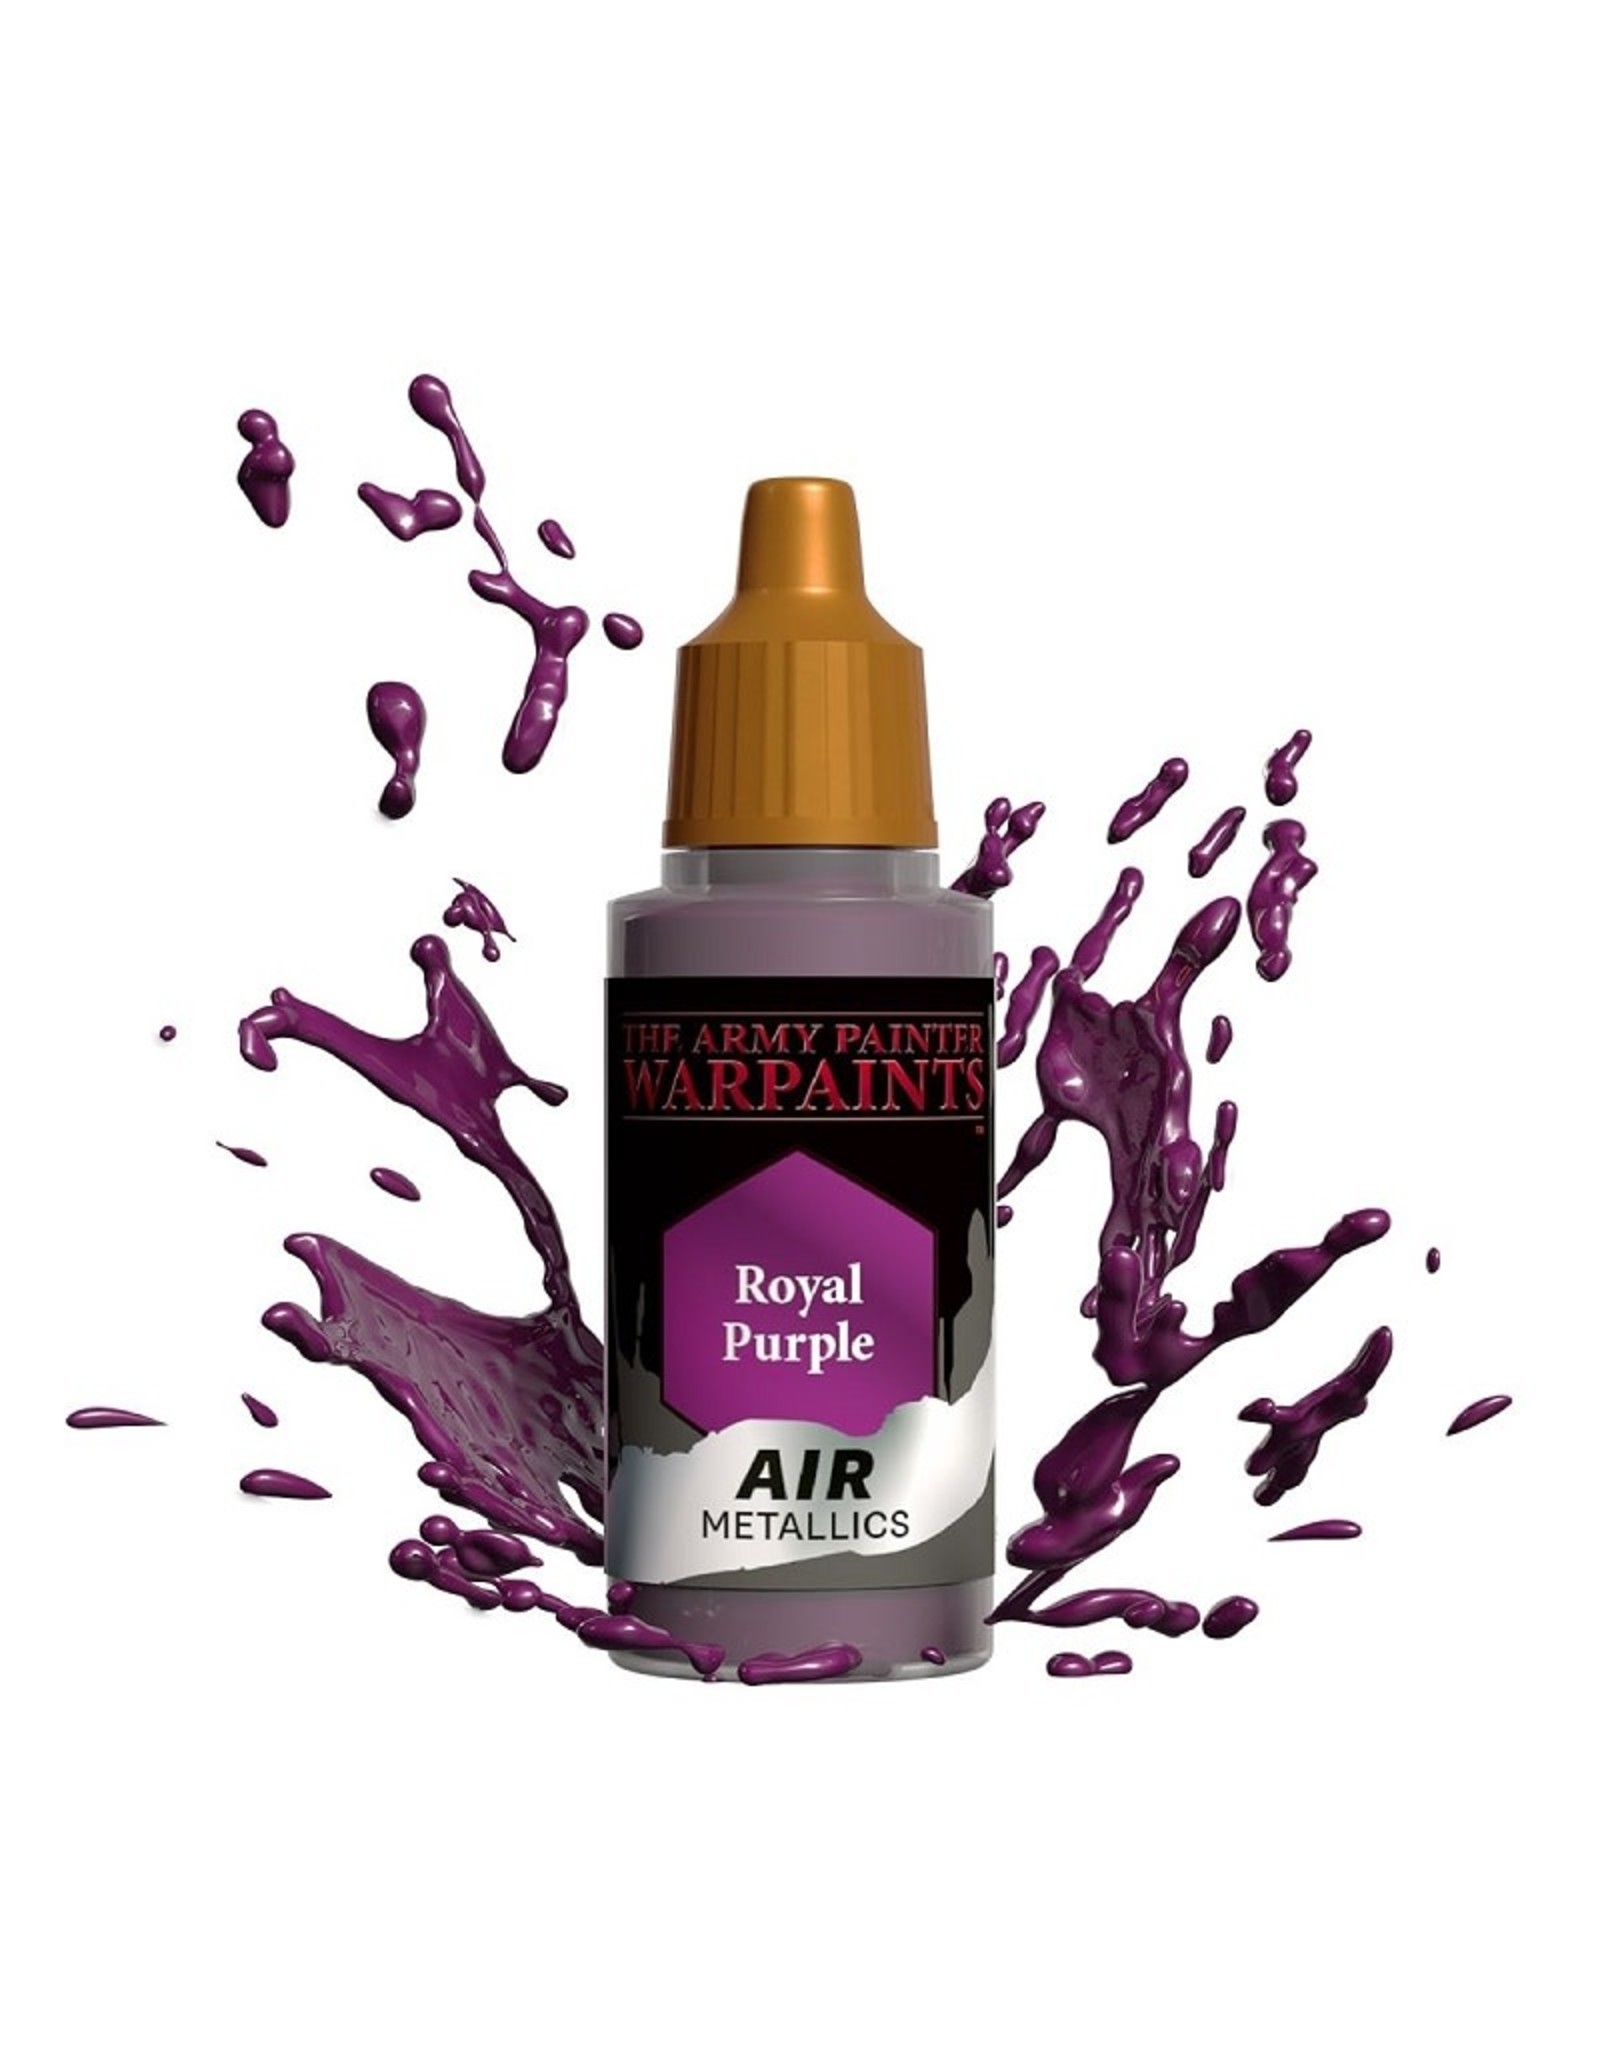 The Army Painter Warpaint Air: Metallics - Royal Purple (18ml)